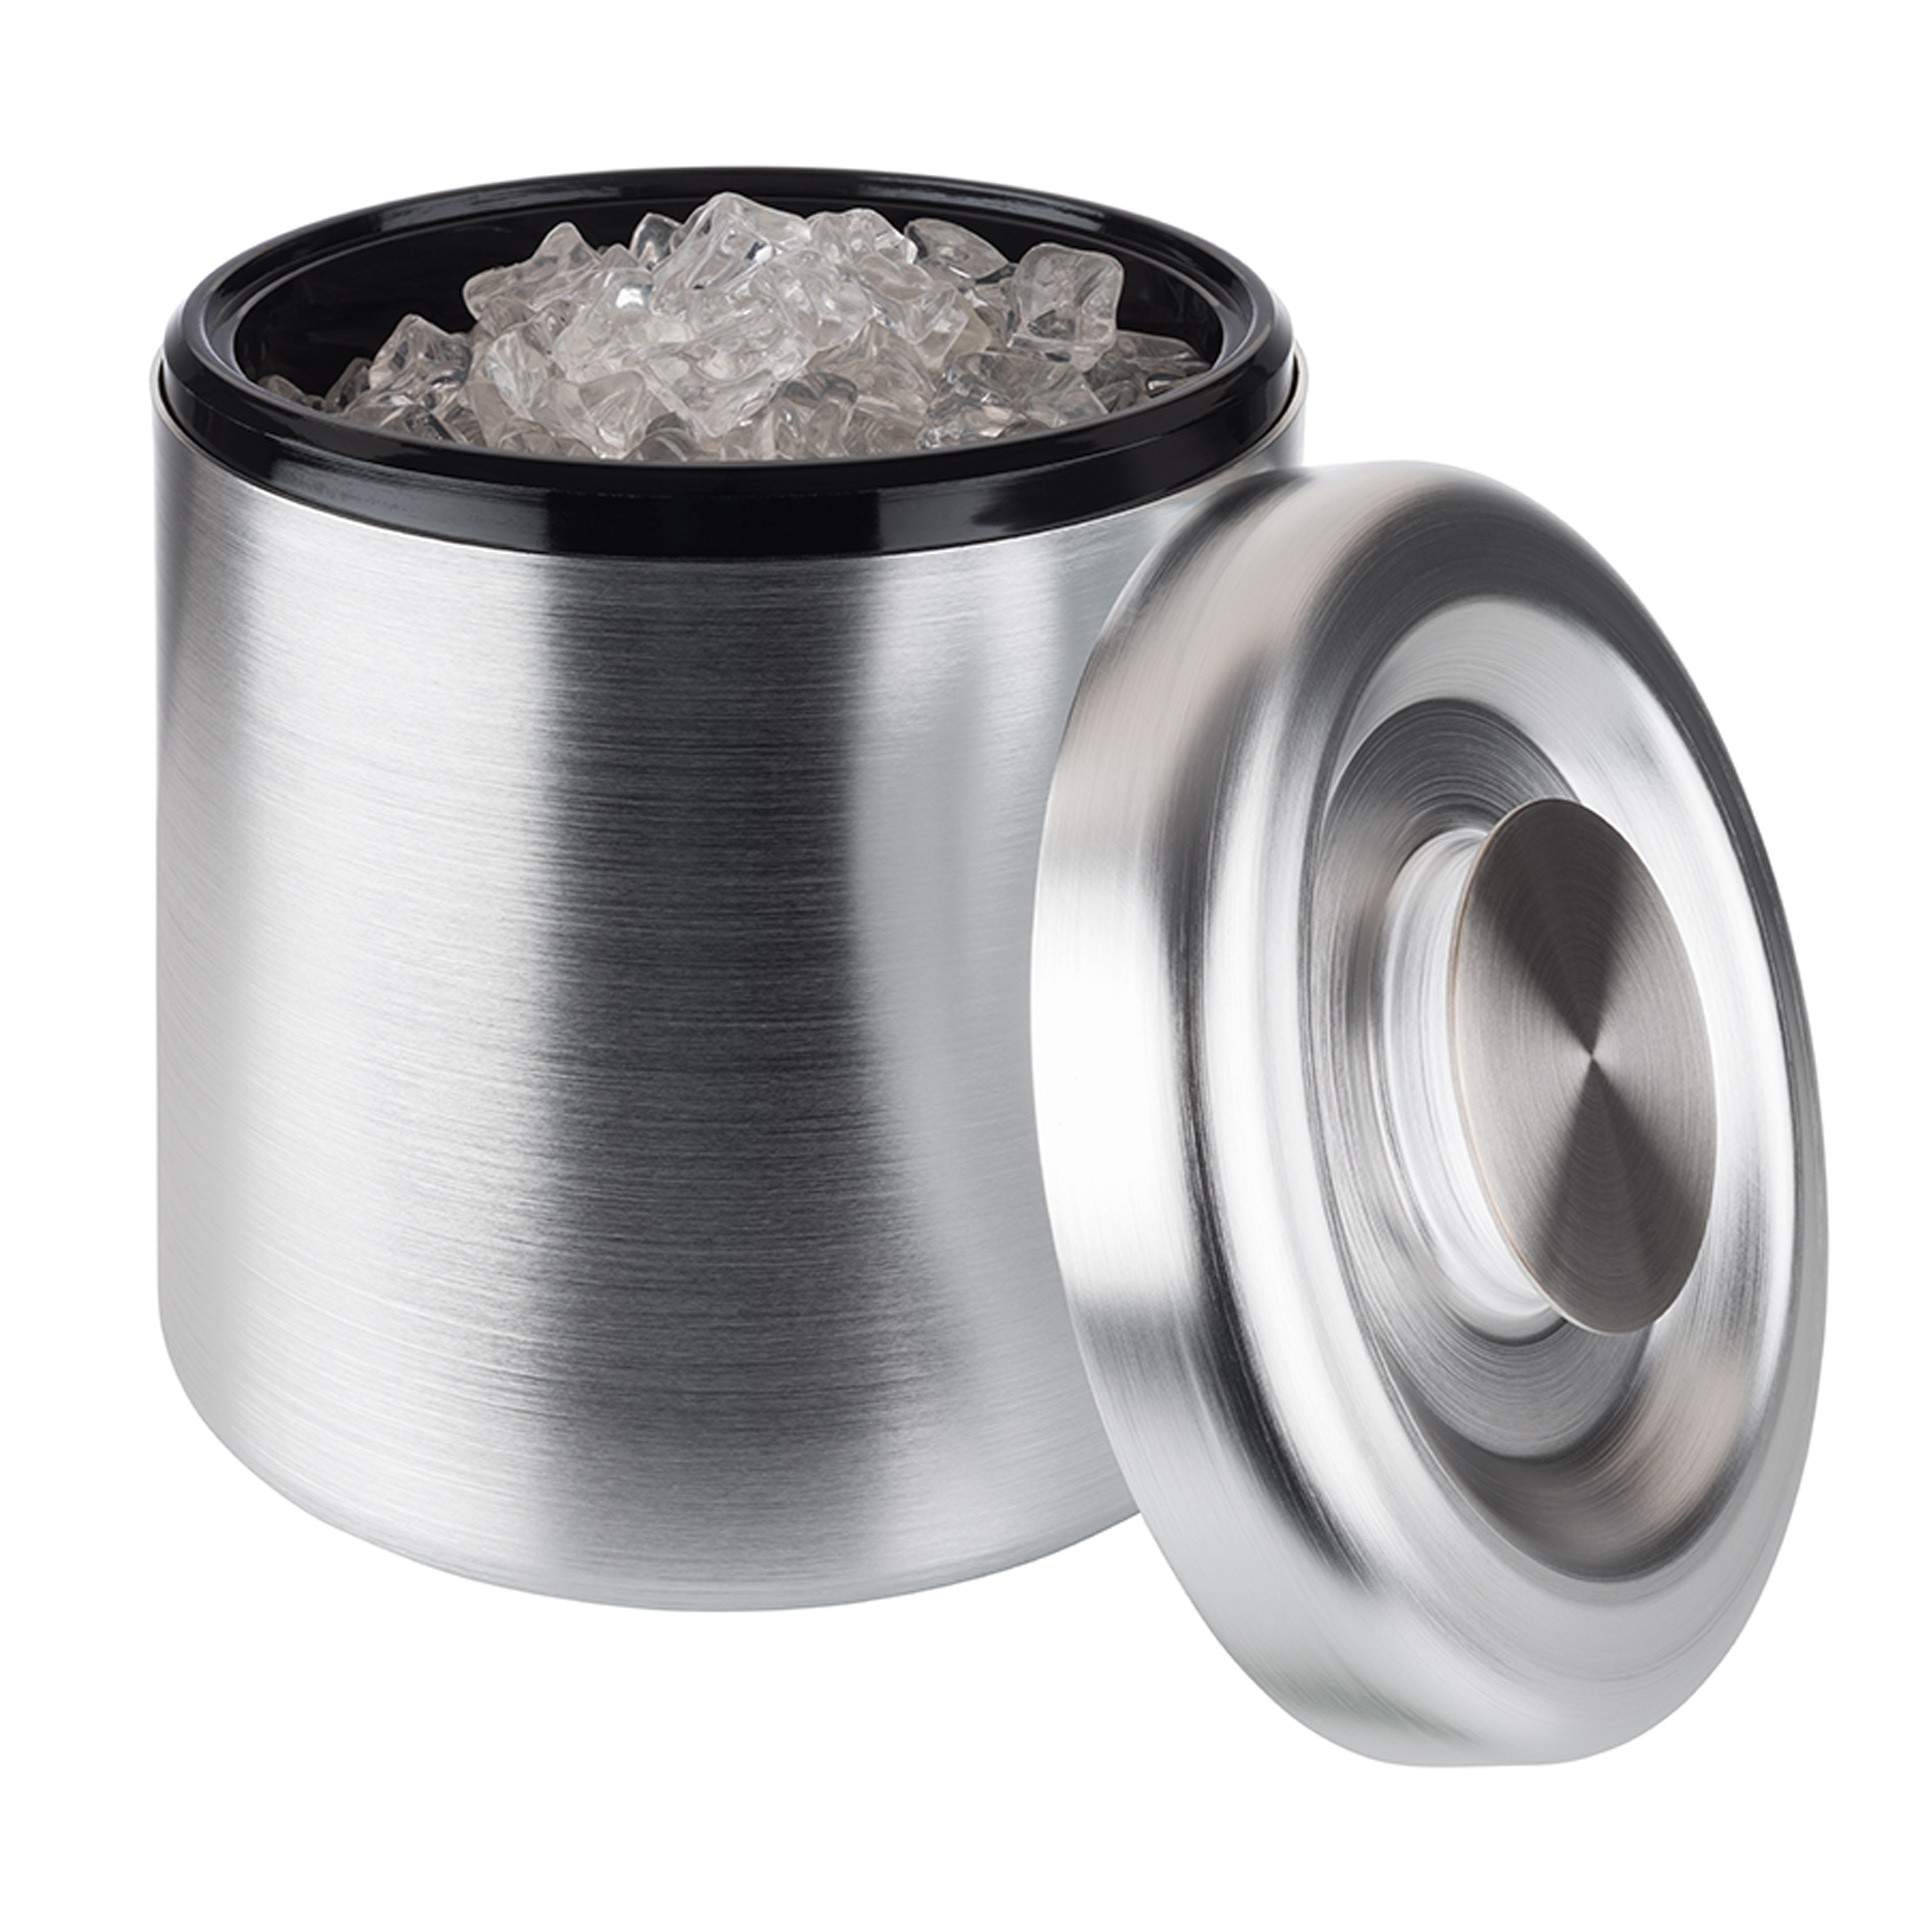 Eisbox - Aluminium eloxiert - silber - rund - Abm. 20,0 cm - Ø 18,5 cm - Inhalt 5,0 l - Aluminium - 36033-B